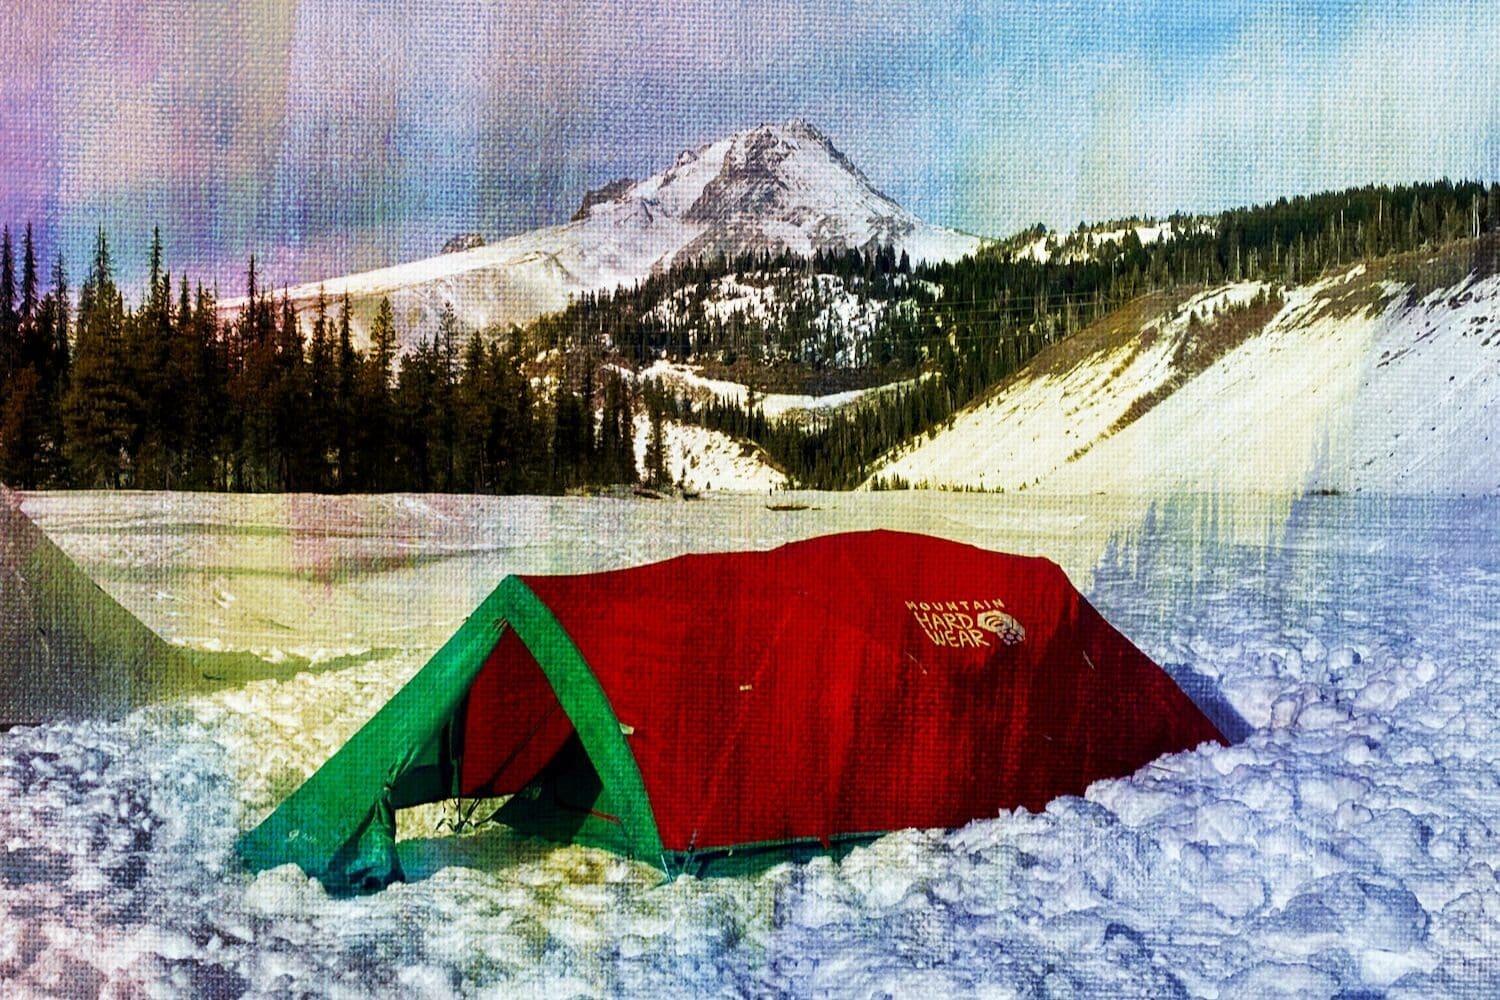 Mountaineering Tents